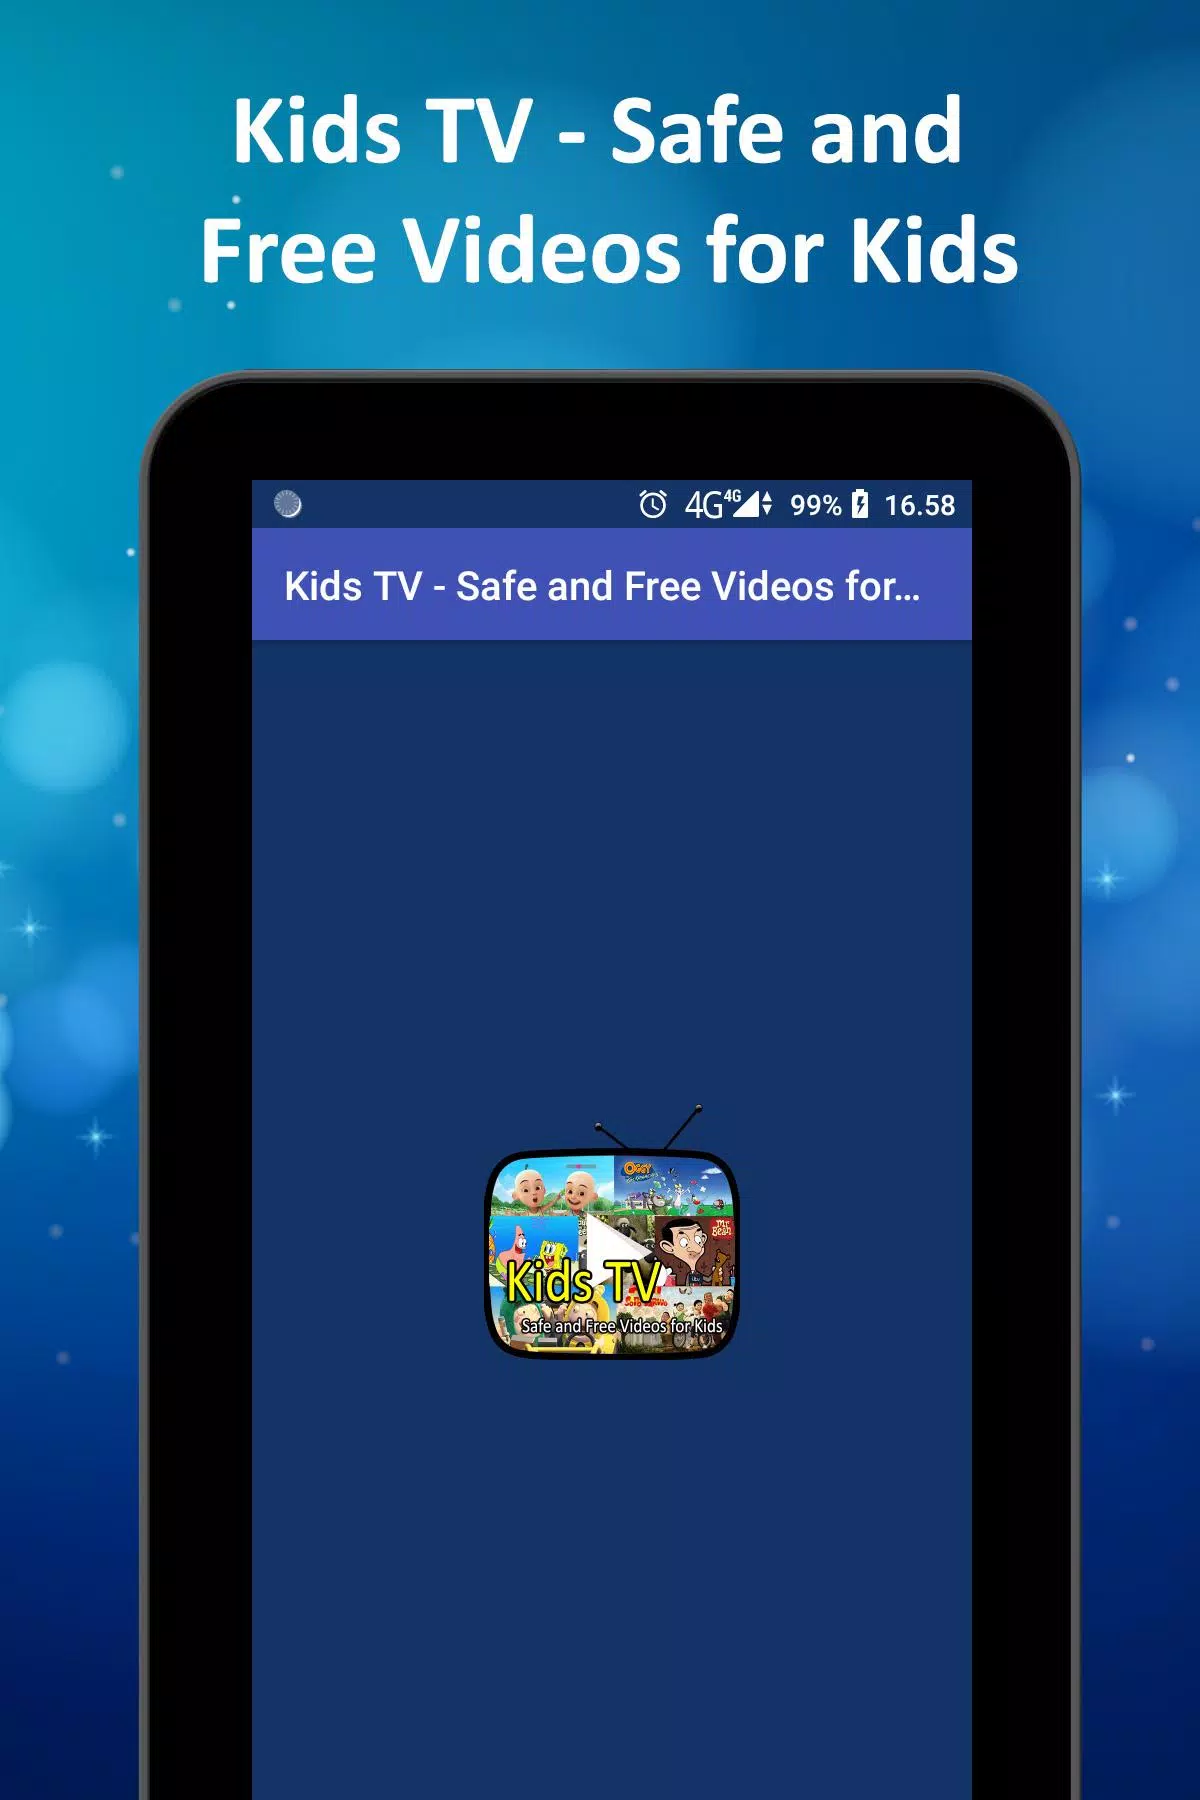 Live Cartoon TV - Kids TV Safe Video for Kids APK for Android Download